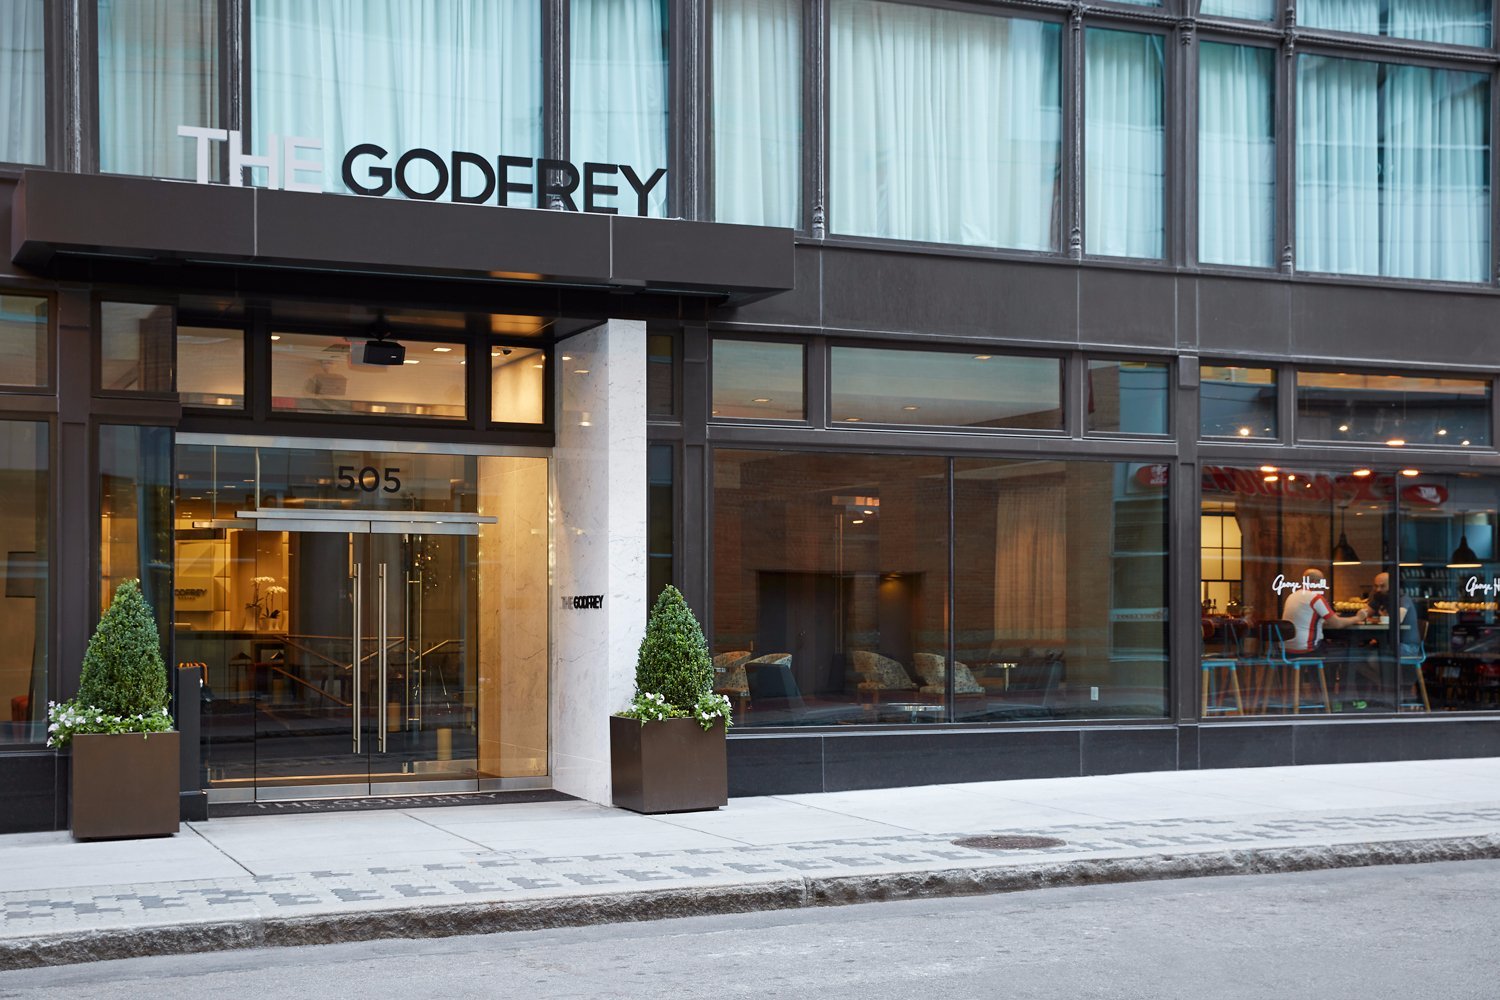 Photo of The Godfrey Hotel Boston, Boston, MA